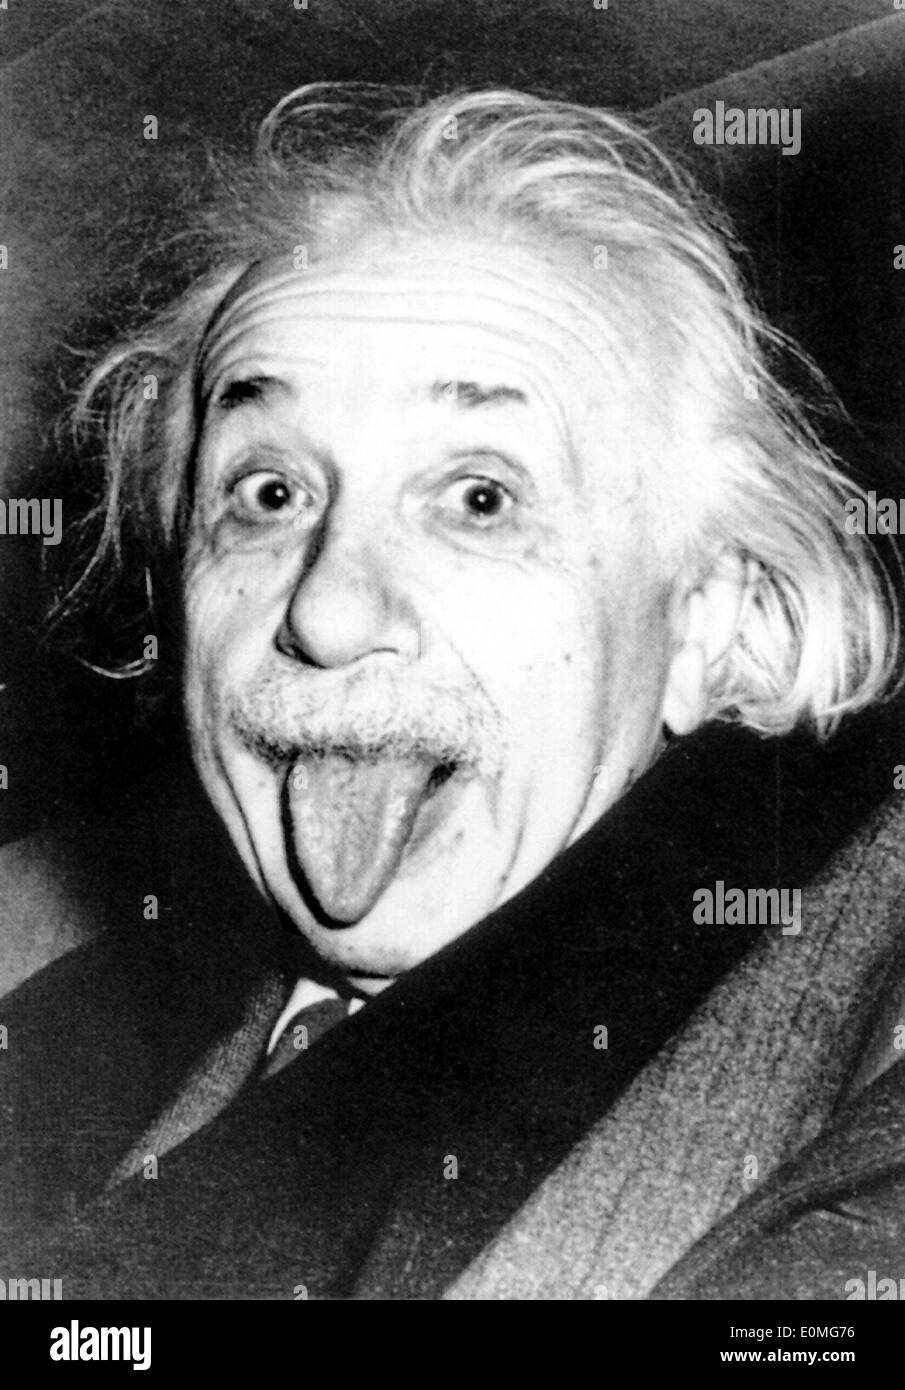 Albert Einstein qui sort sa langue Banque D'Images